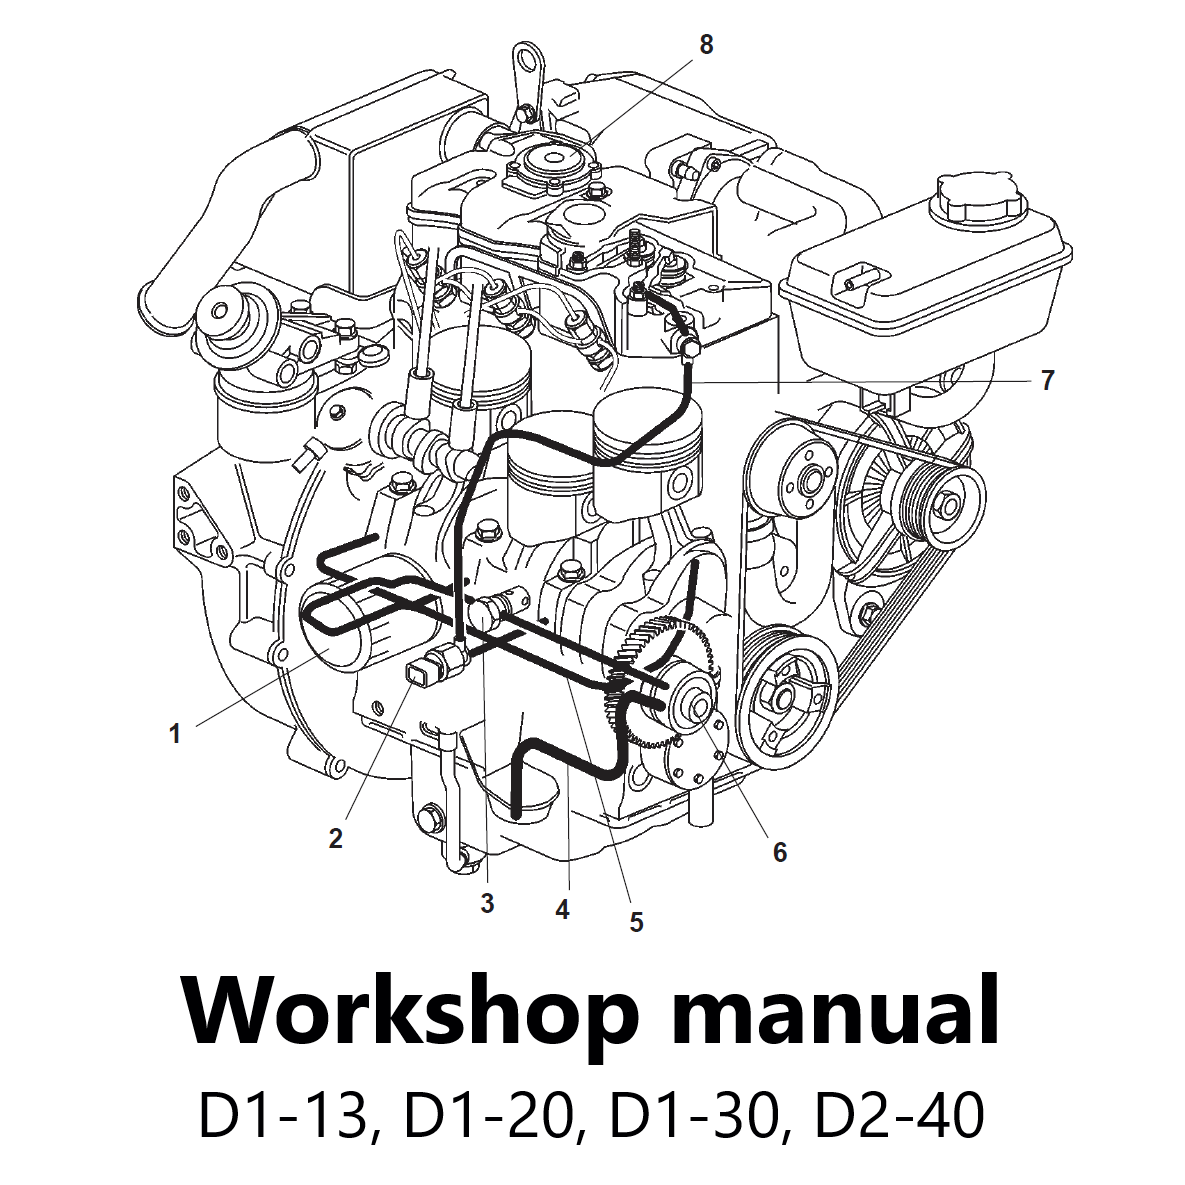 Volvo Penta Marine & Industrial Engine (D1-13, D1-20, D1-30, D2-40) Workshop Manual